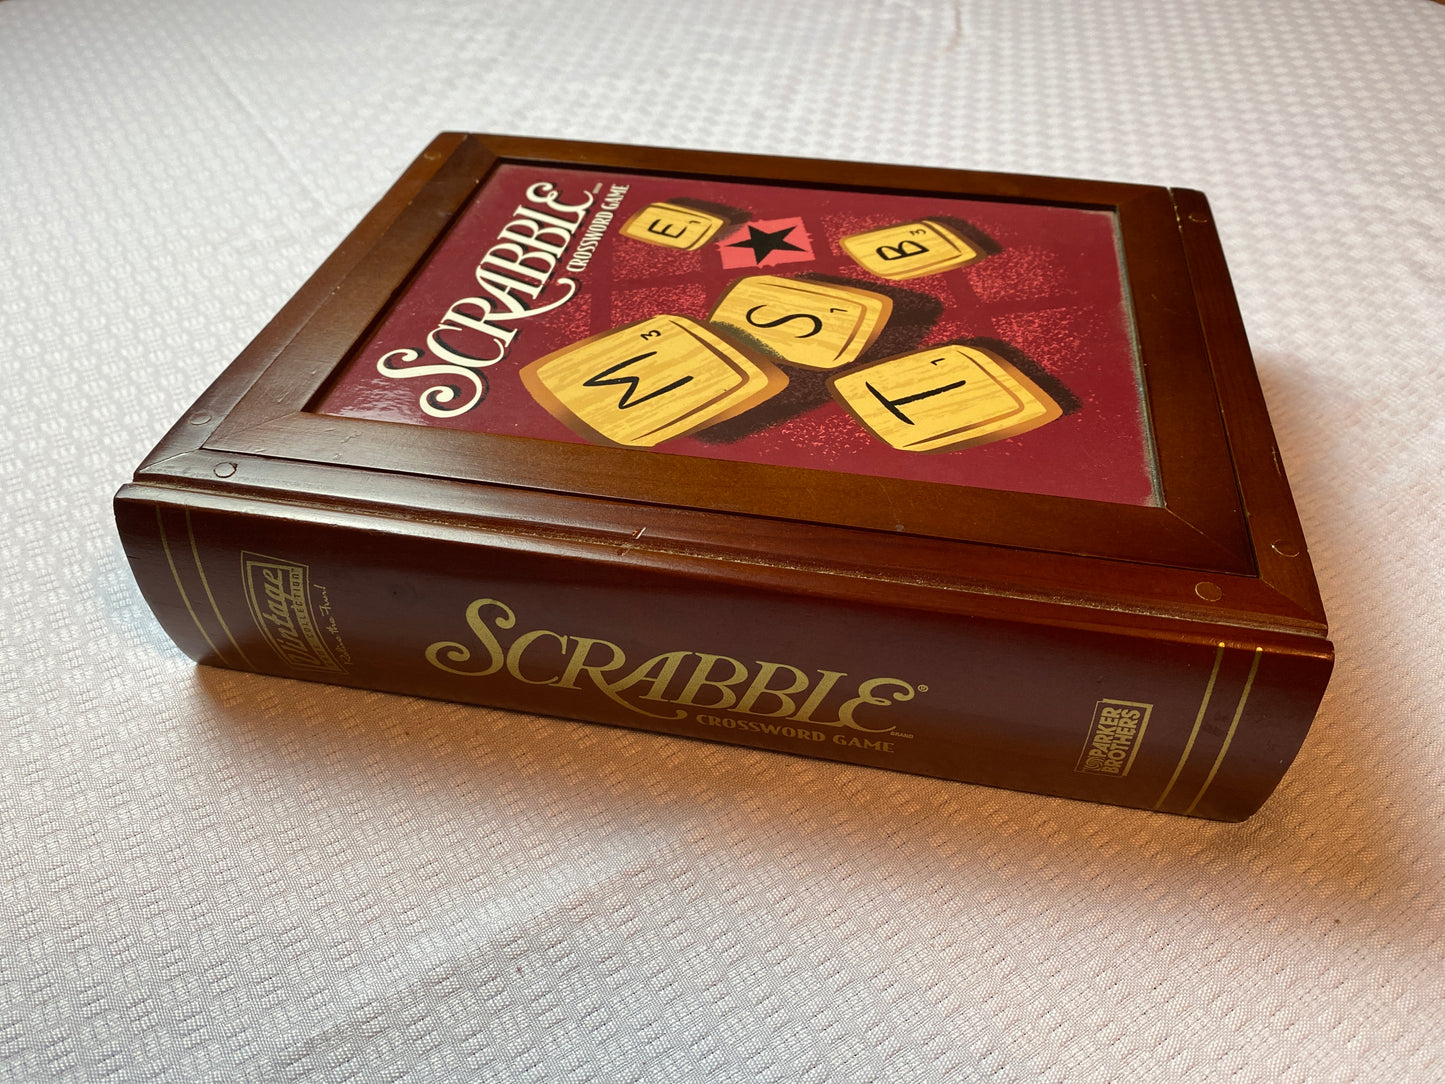 Scrabble - Wooden Book Box (Vintage)